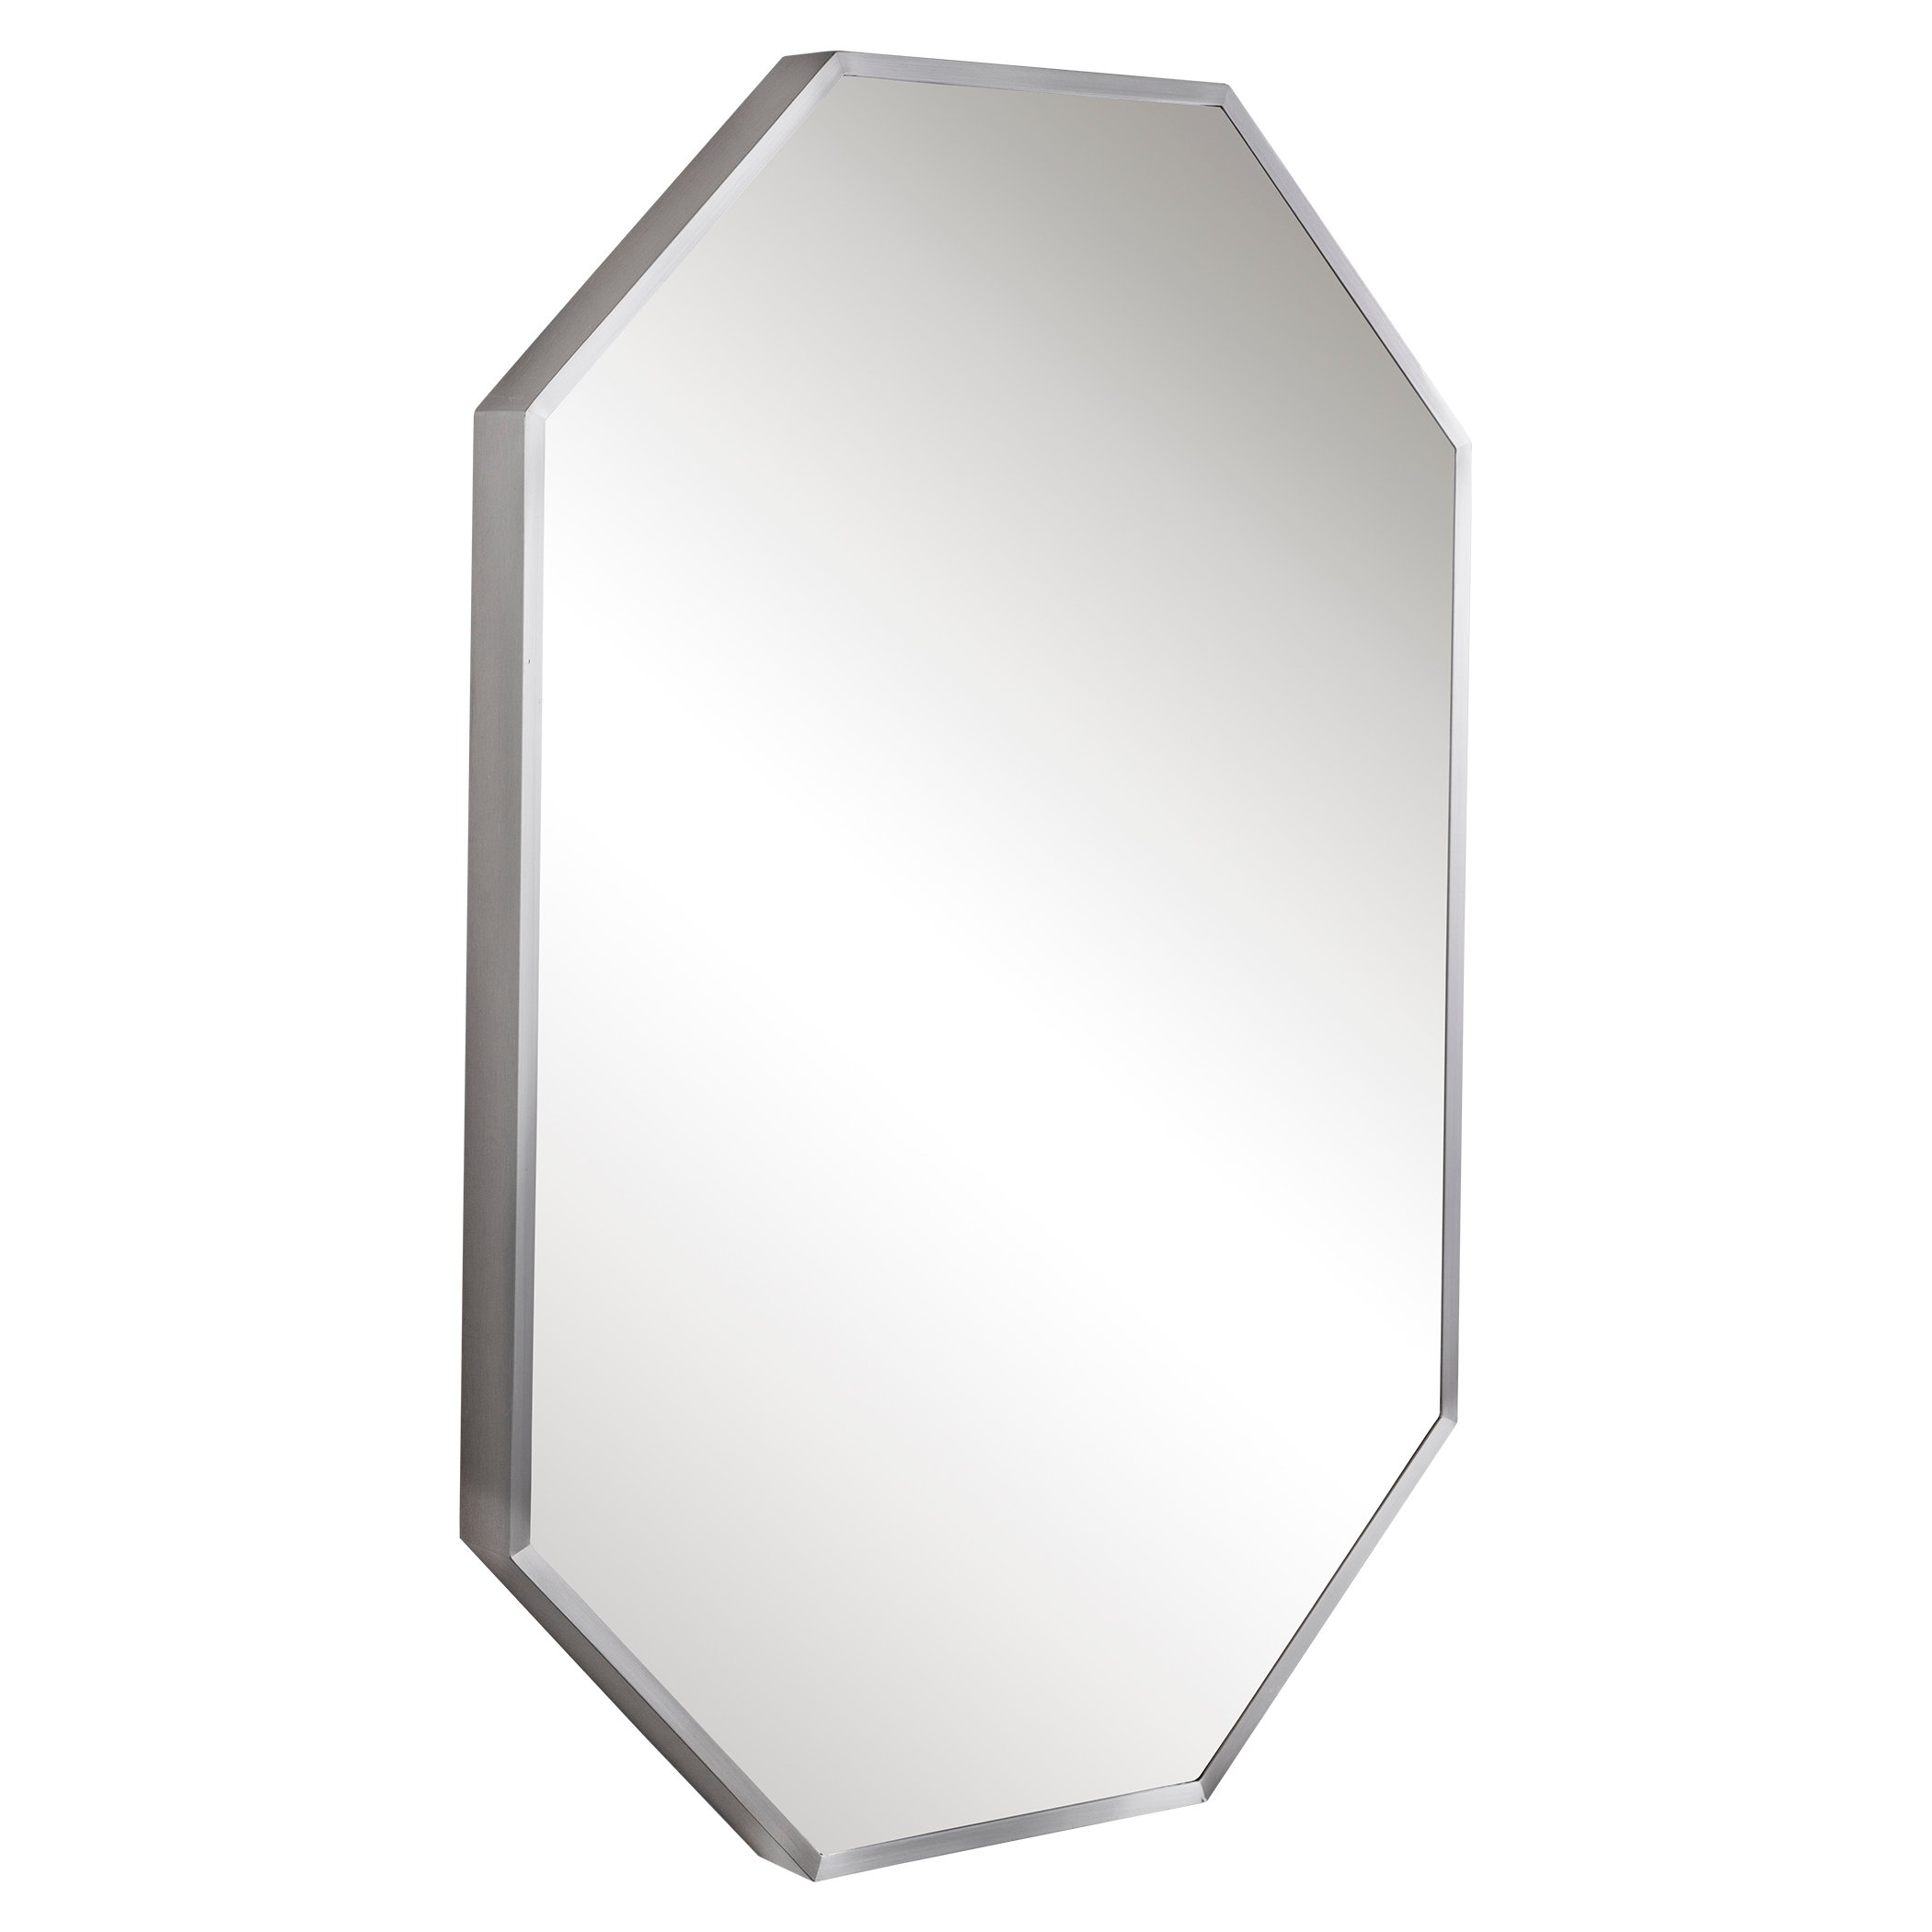 Stuartson Octagon Vanity Mirror - Image 1